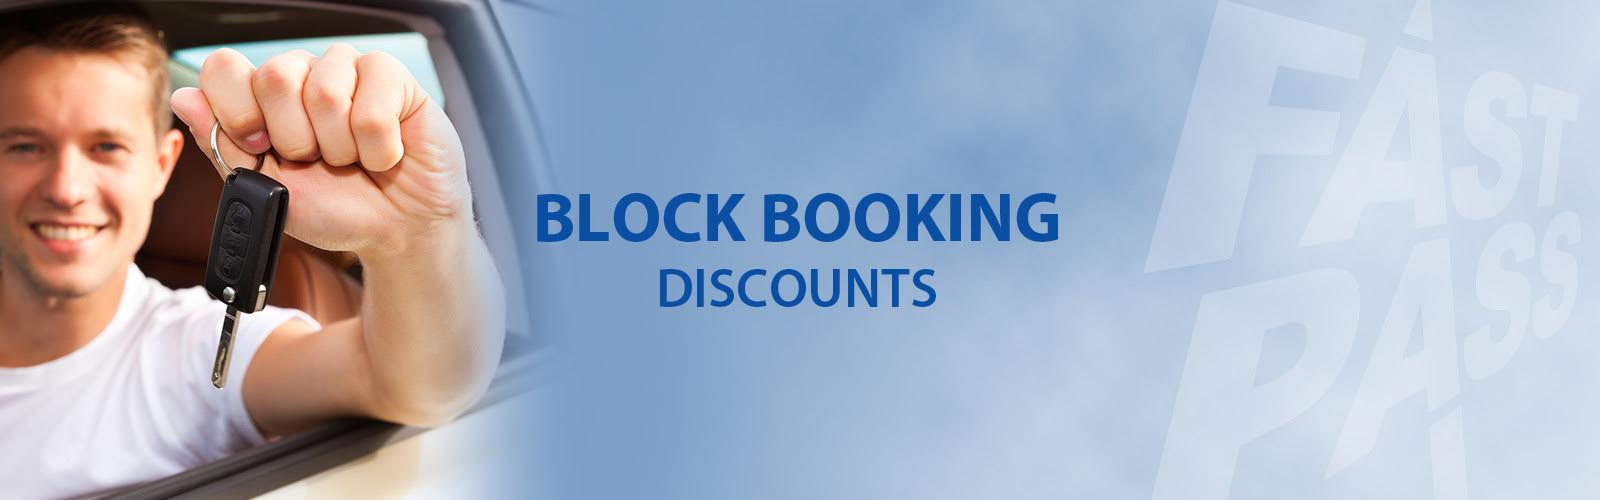 block booking discounts